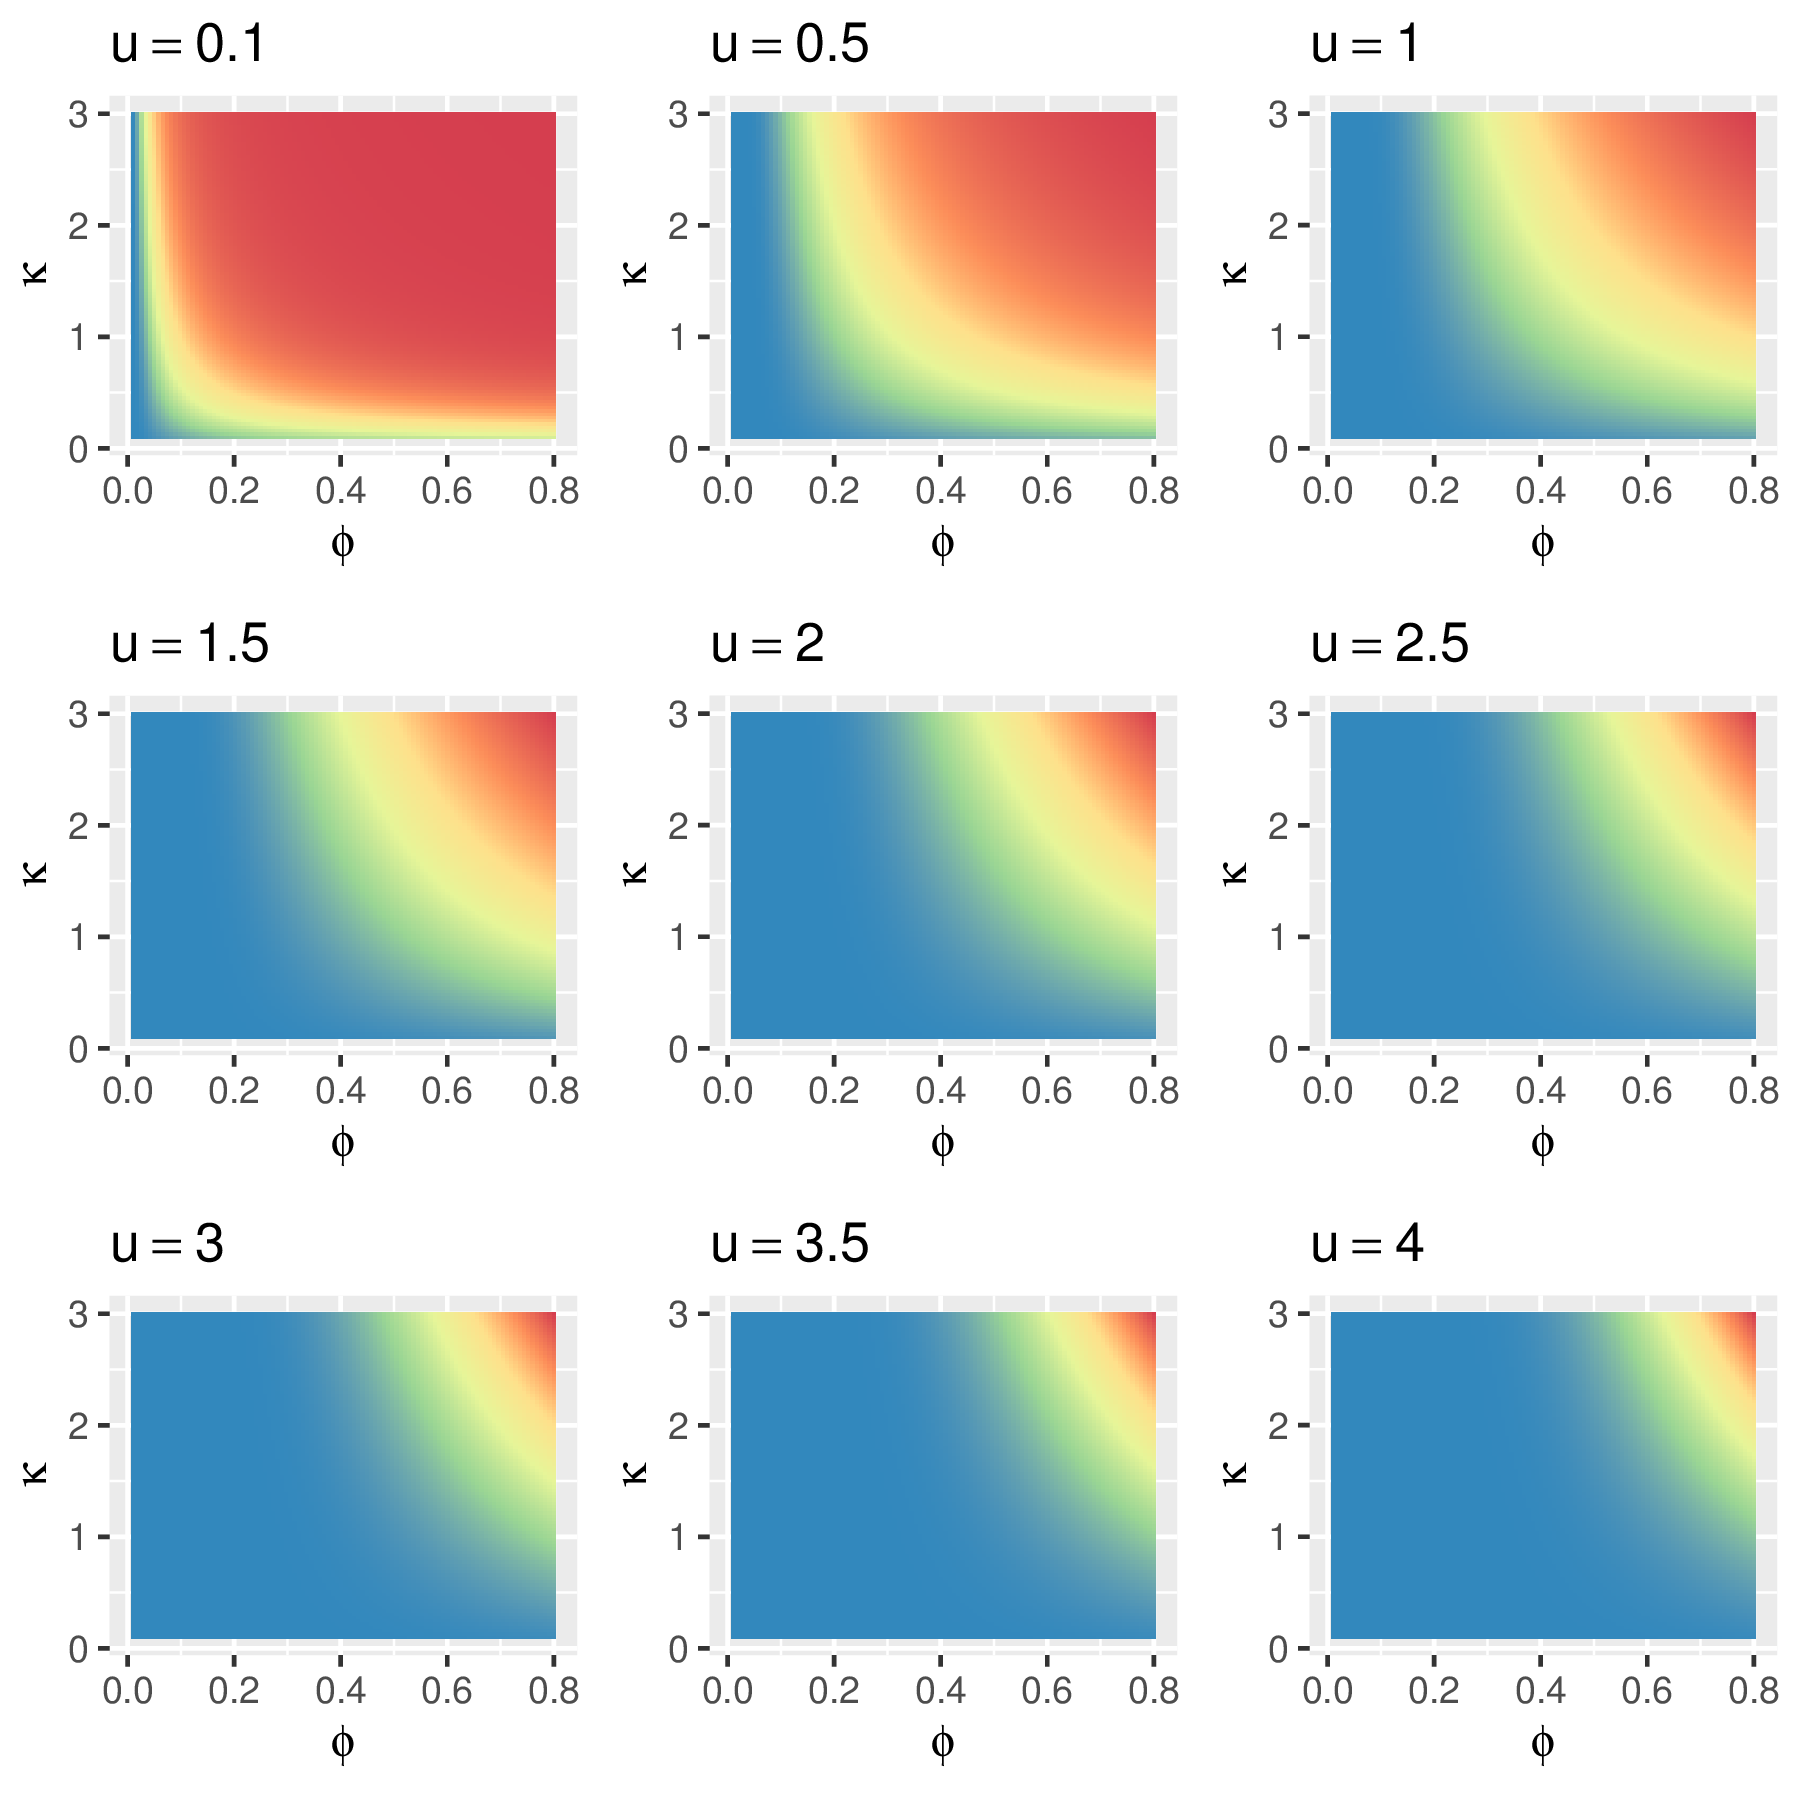 $\rho(\mathsf{u})$ 在不同空间距离 $\mathsf{u}$处随 $\kappa$ 和 $\phi$ 的变化，从蓝到红的颜色变化表示 $\rho(\mathsf{u})$ 的值由小到大